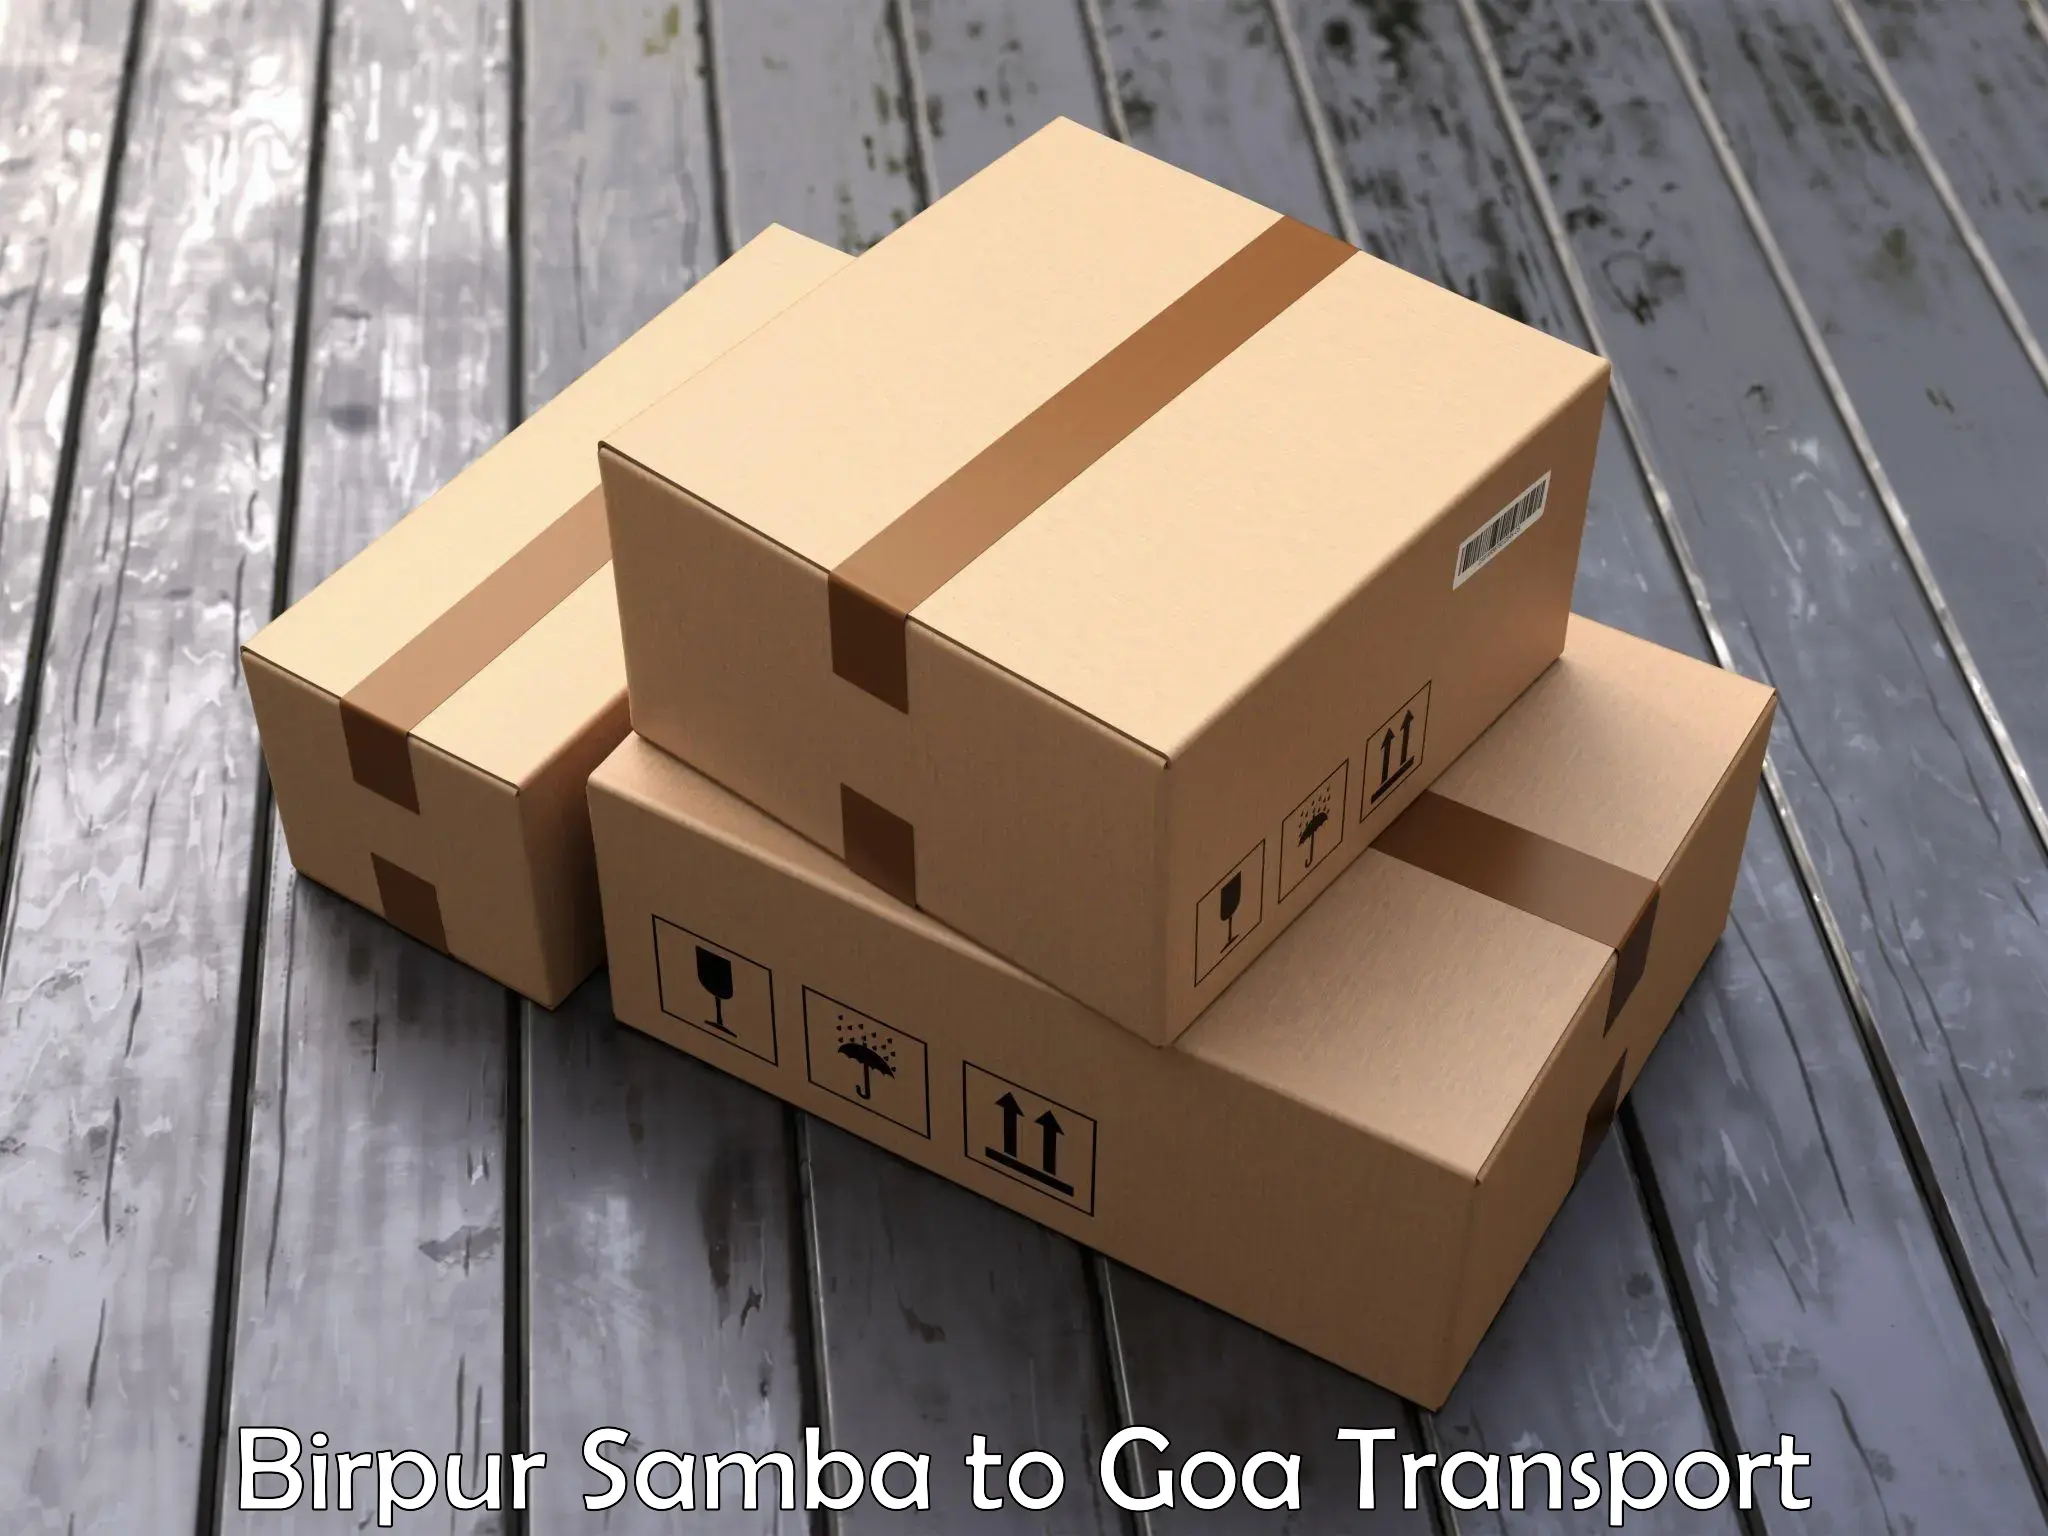 Truck transport companies in India Birpur Samba to Goa